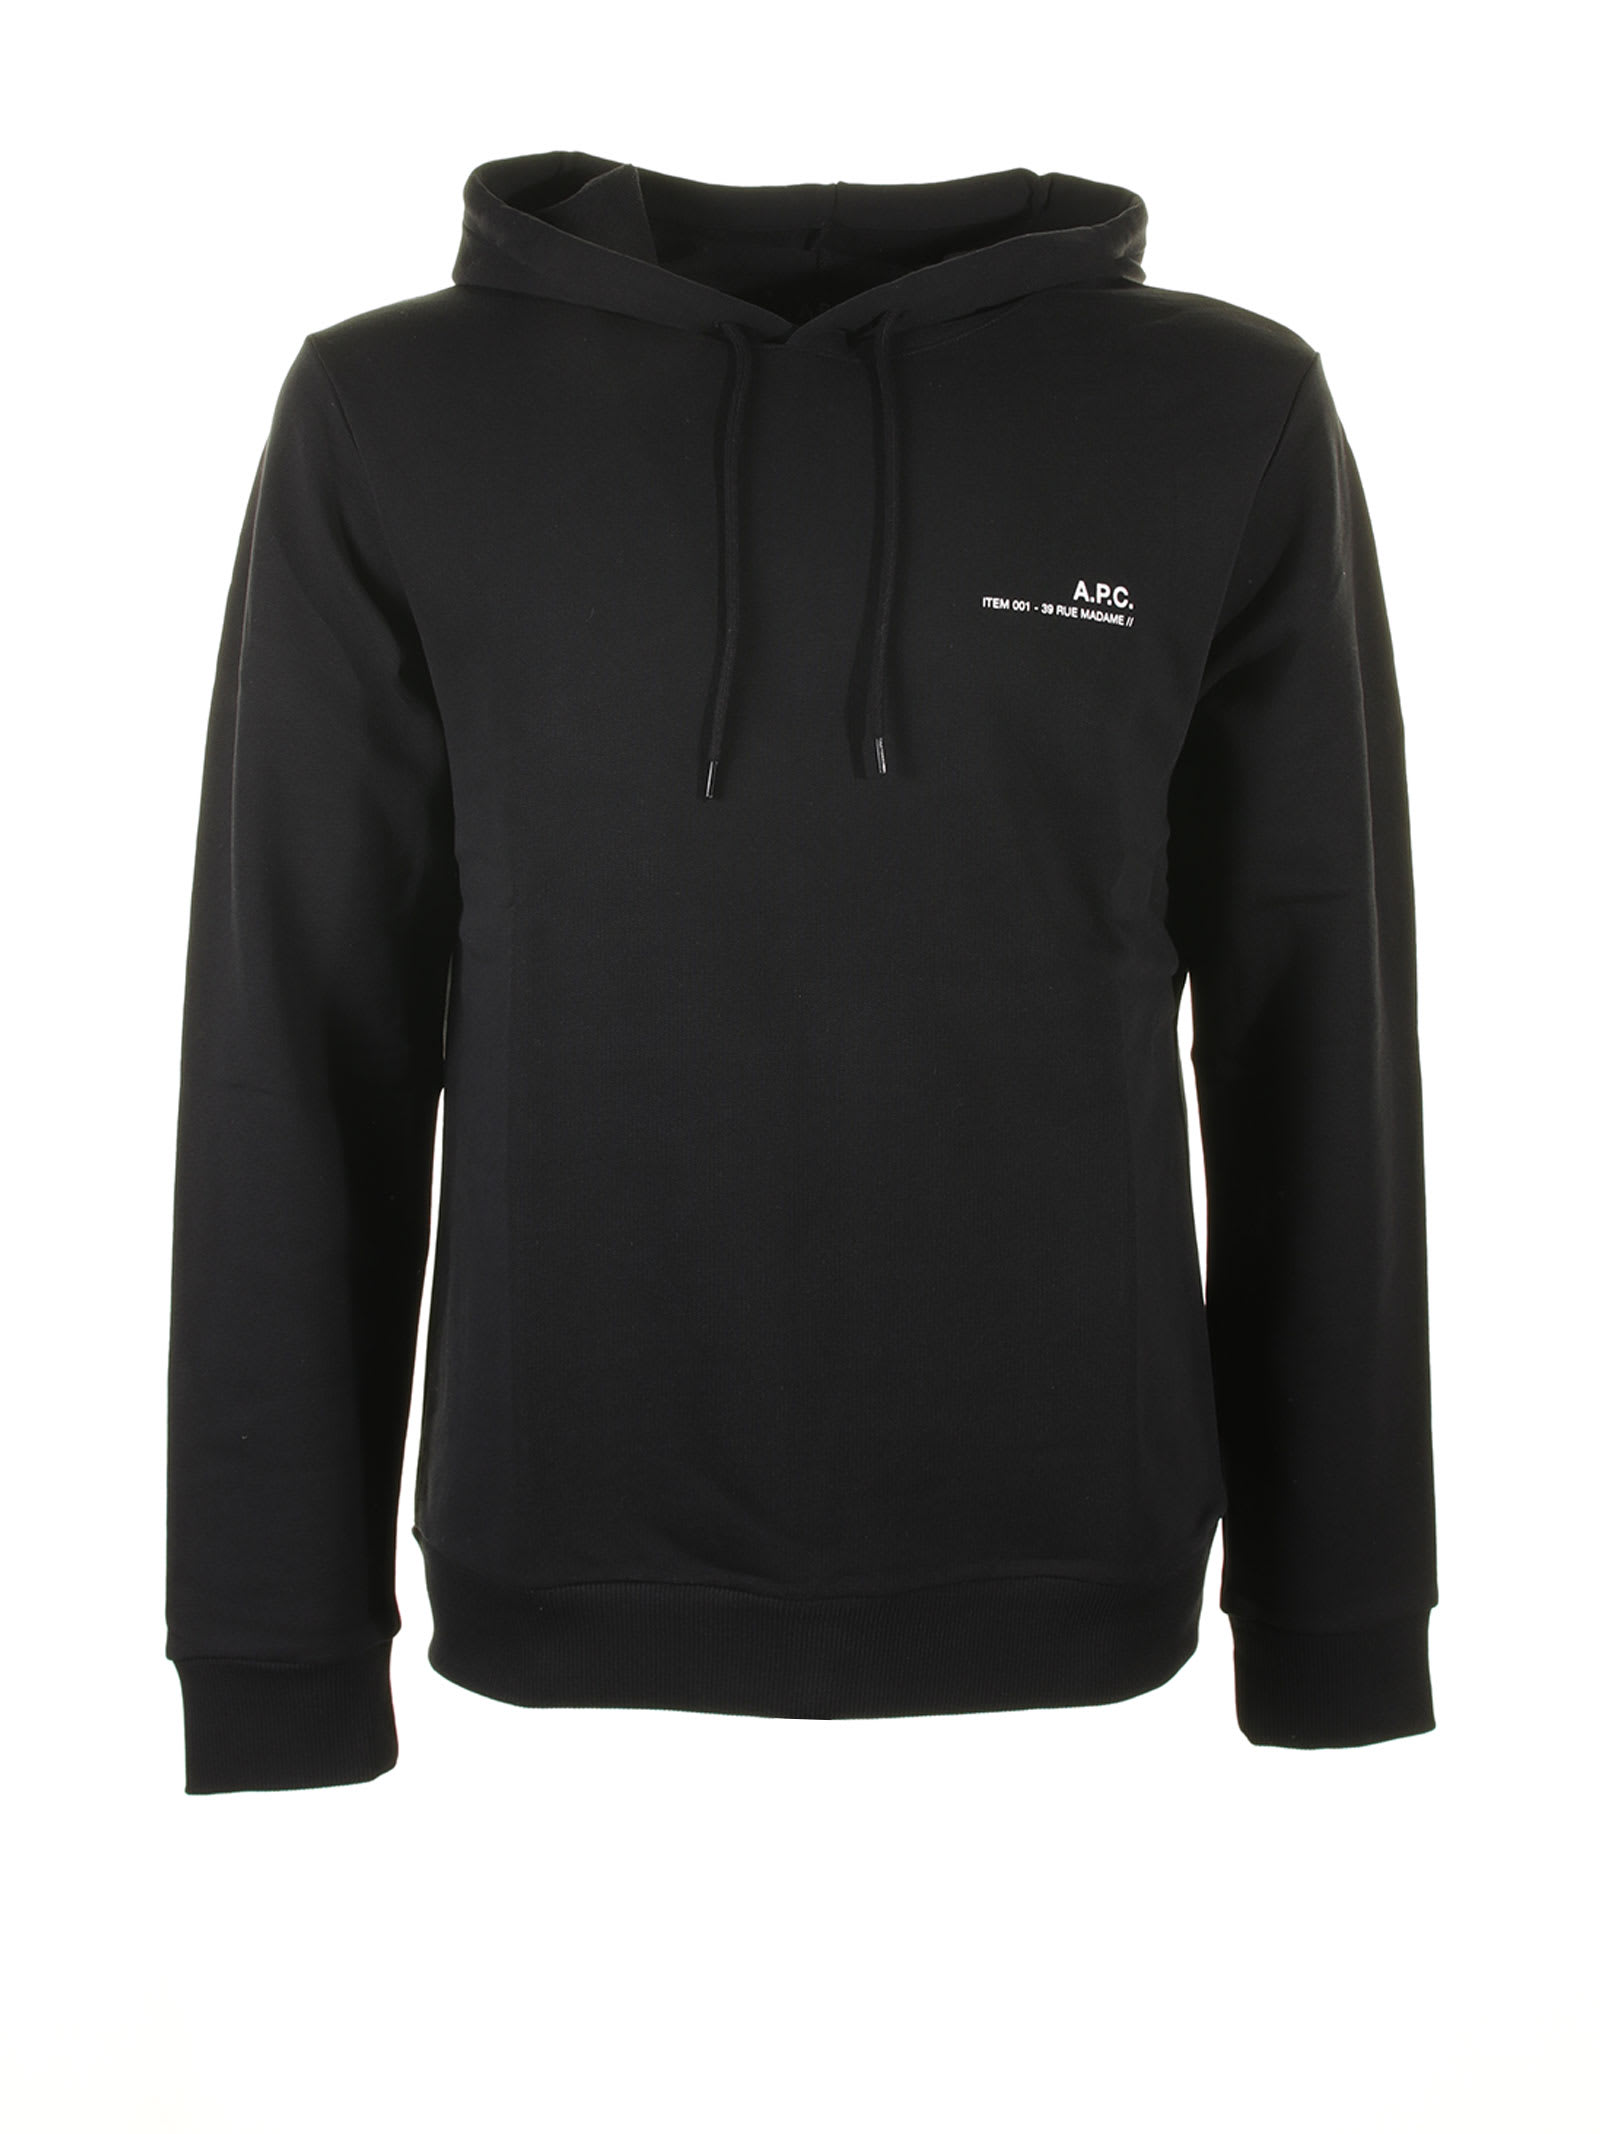 Shop Apc Black Hooded Sweatshirt